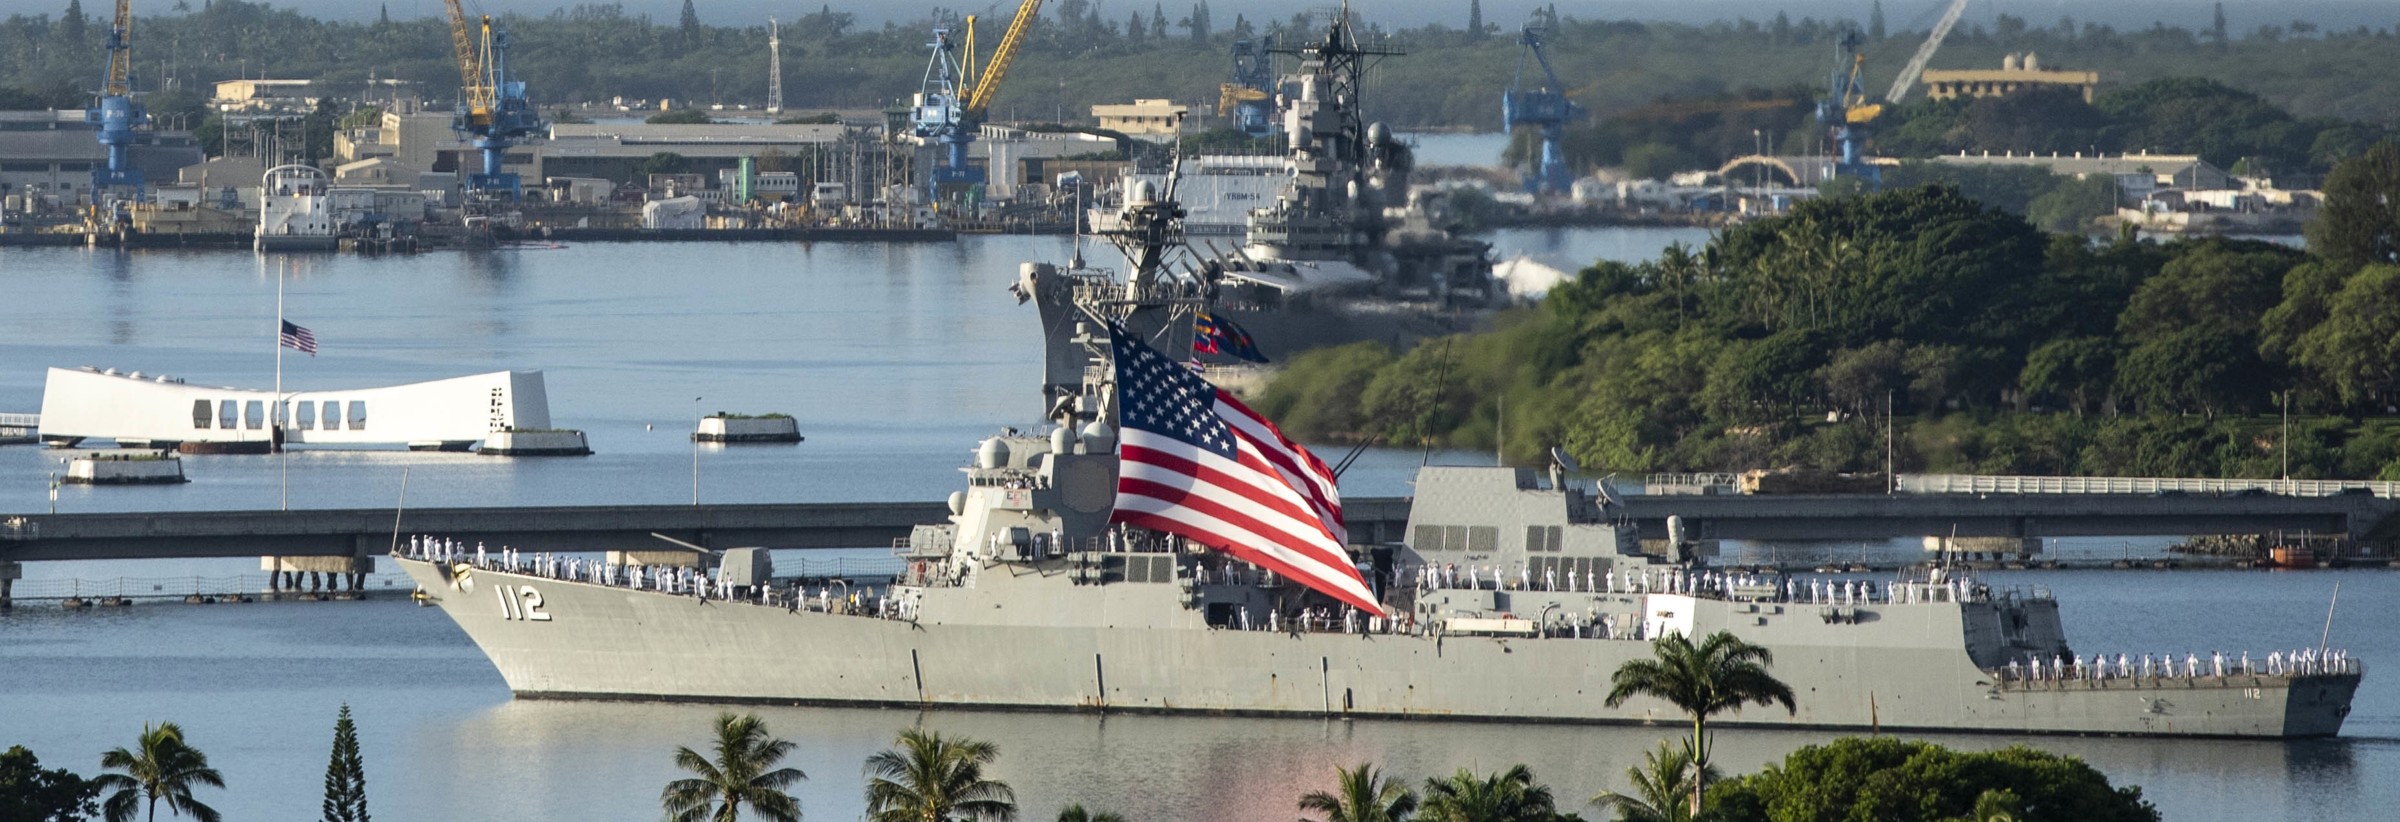 ddg-112 uss michael murphy arleigh burke class guided missile destroyer aegis us navy pearl harbor hawaii 73